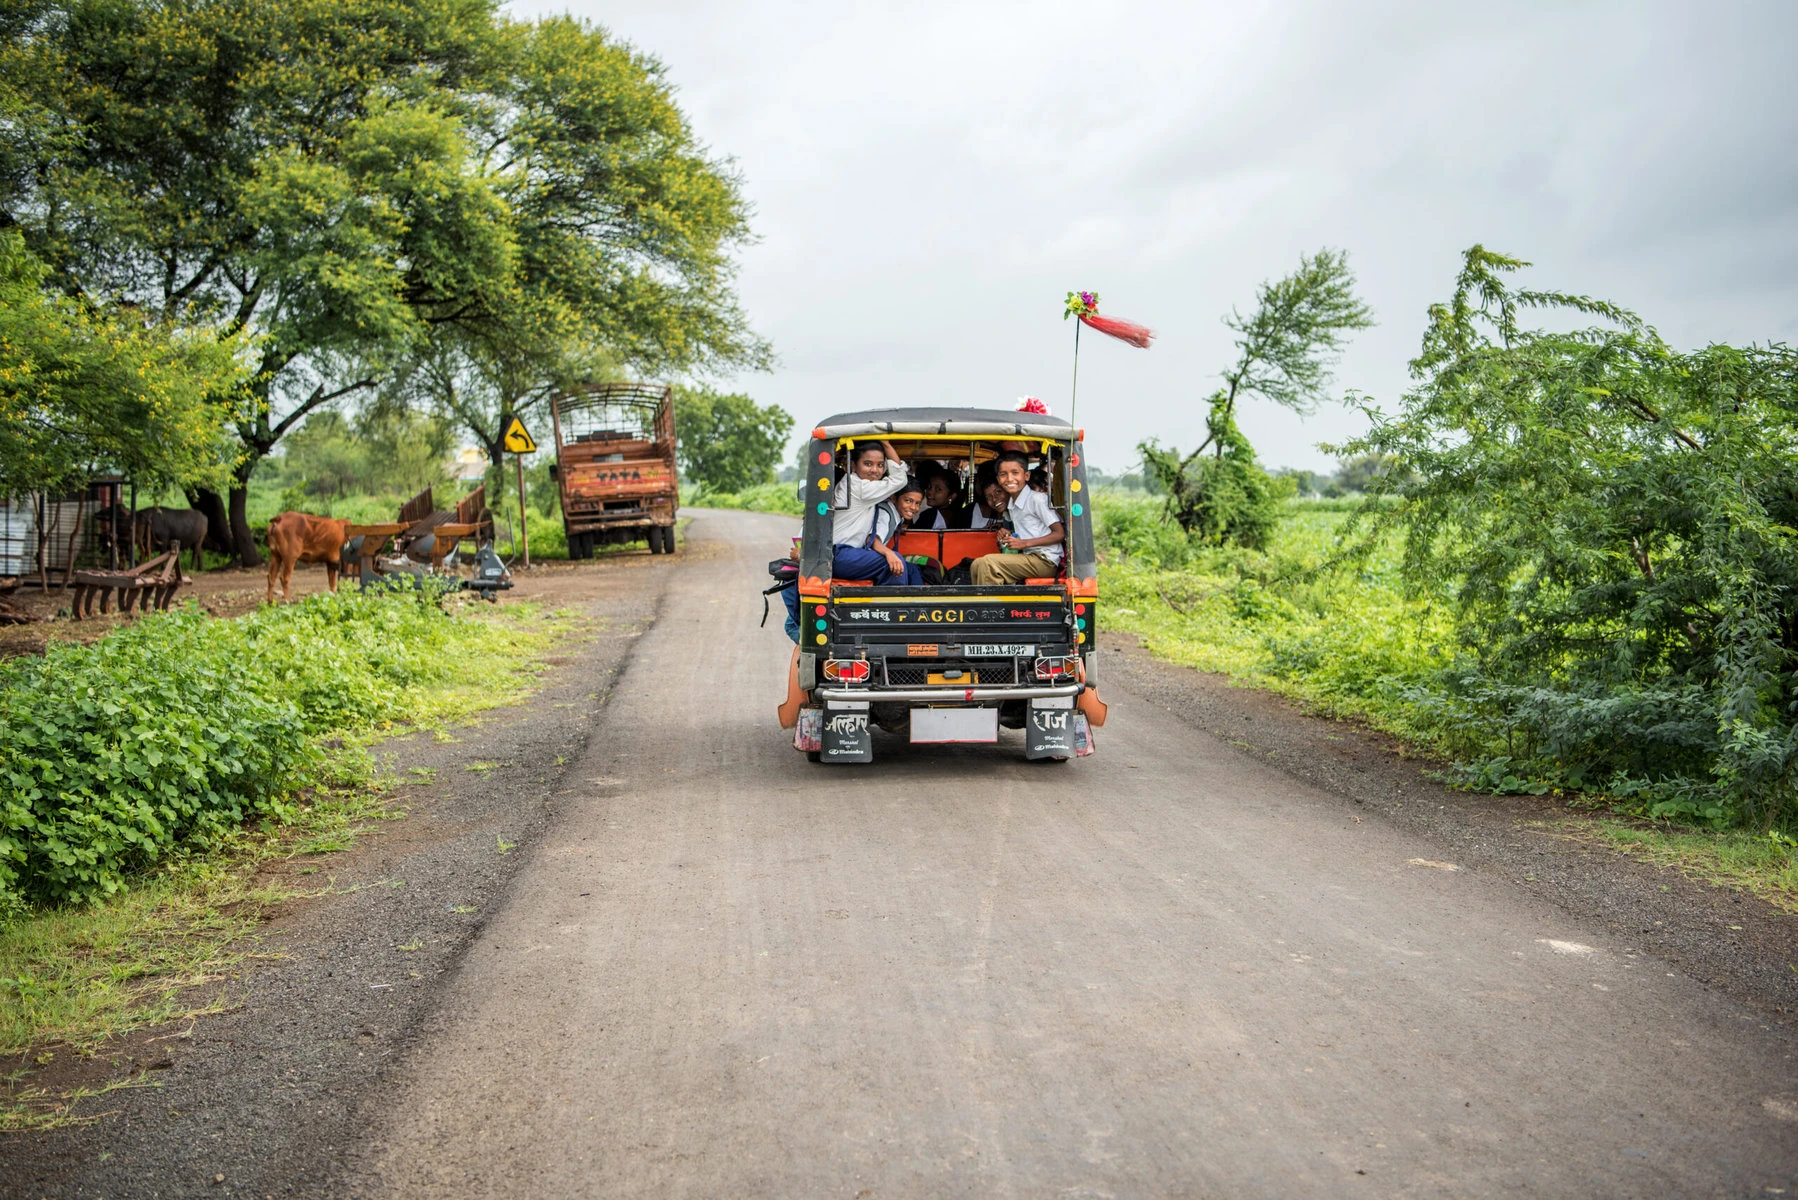 Children on their way to school in a rural village in Beed. Credit: Tukaram.Karve / Shutterstock